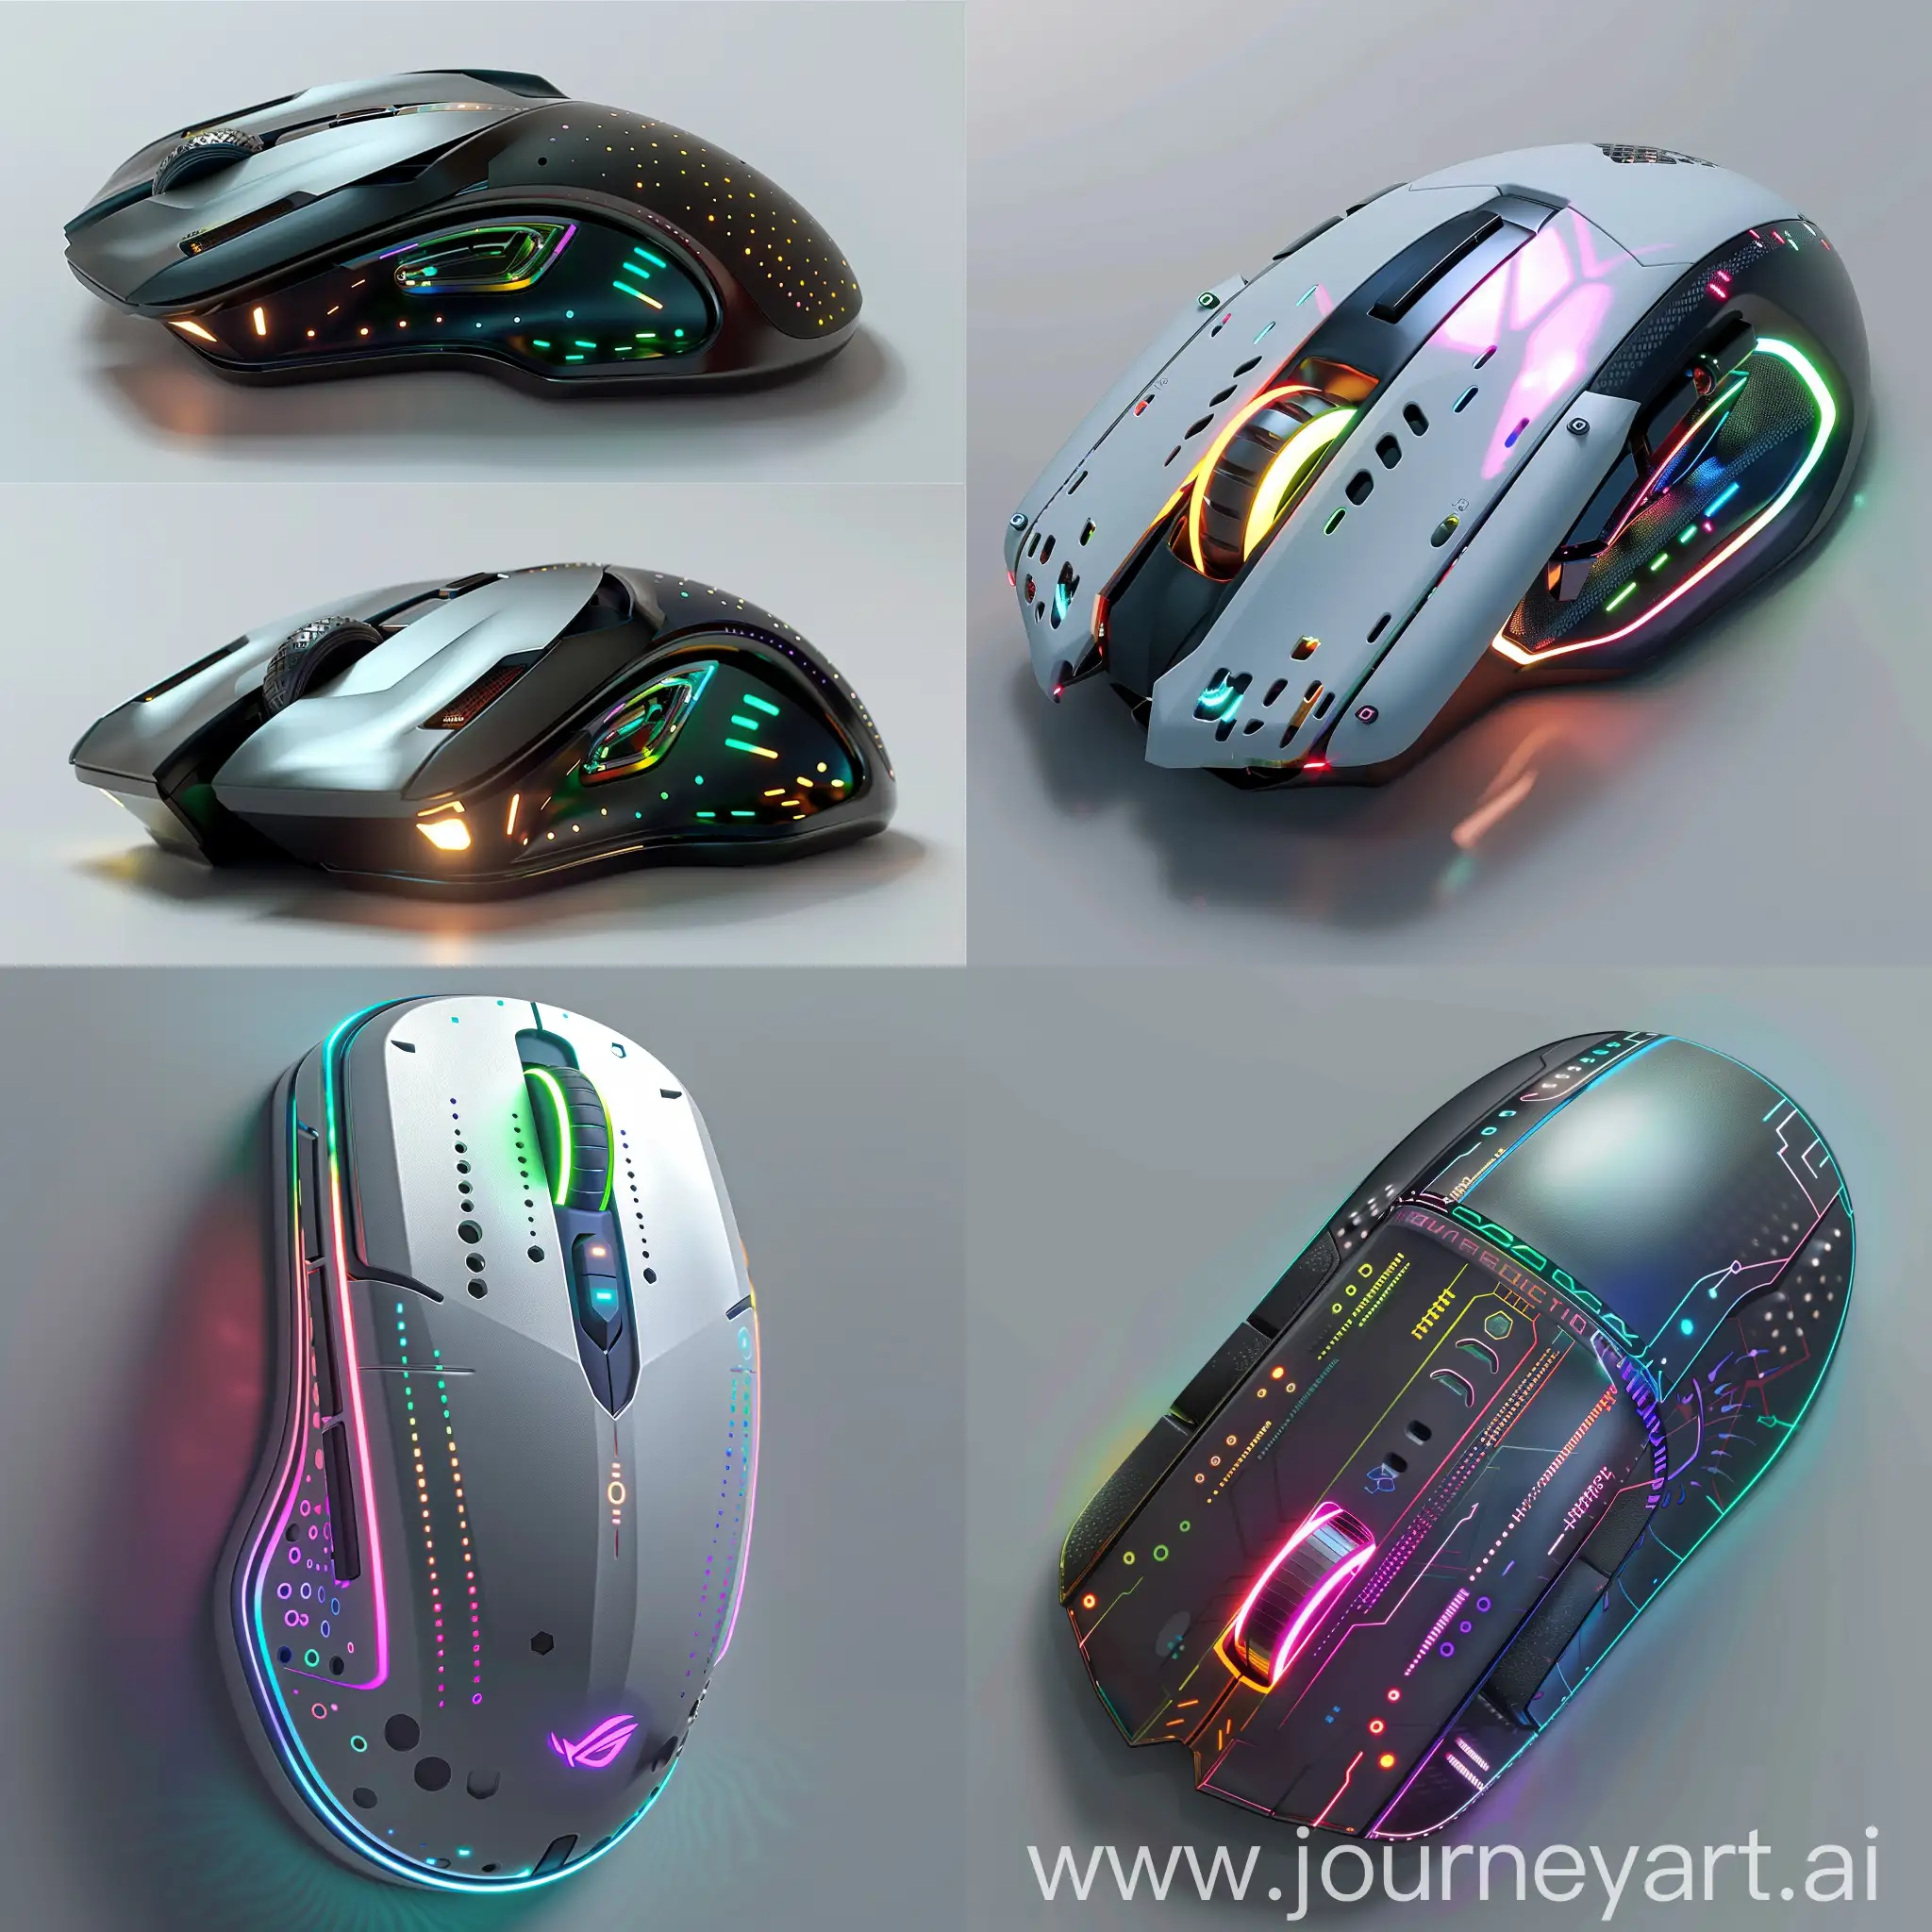 Futuristic-HighTech-PC-Mouse-with-Adaptive-Sensor-Technology-and-Haptic-Feedback